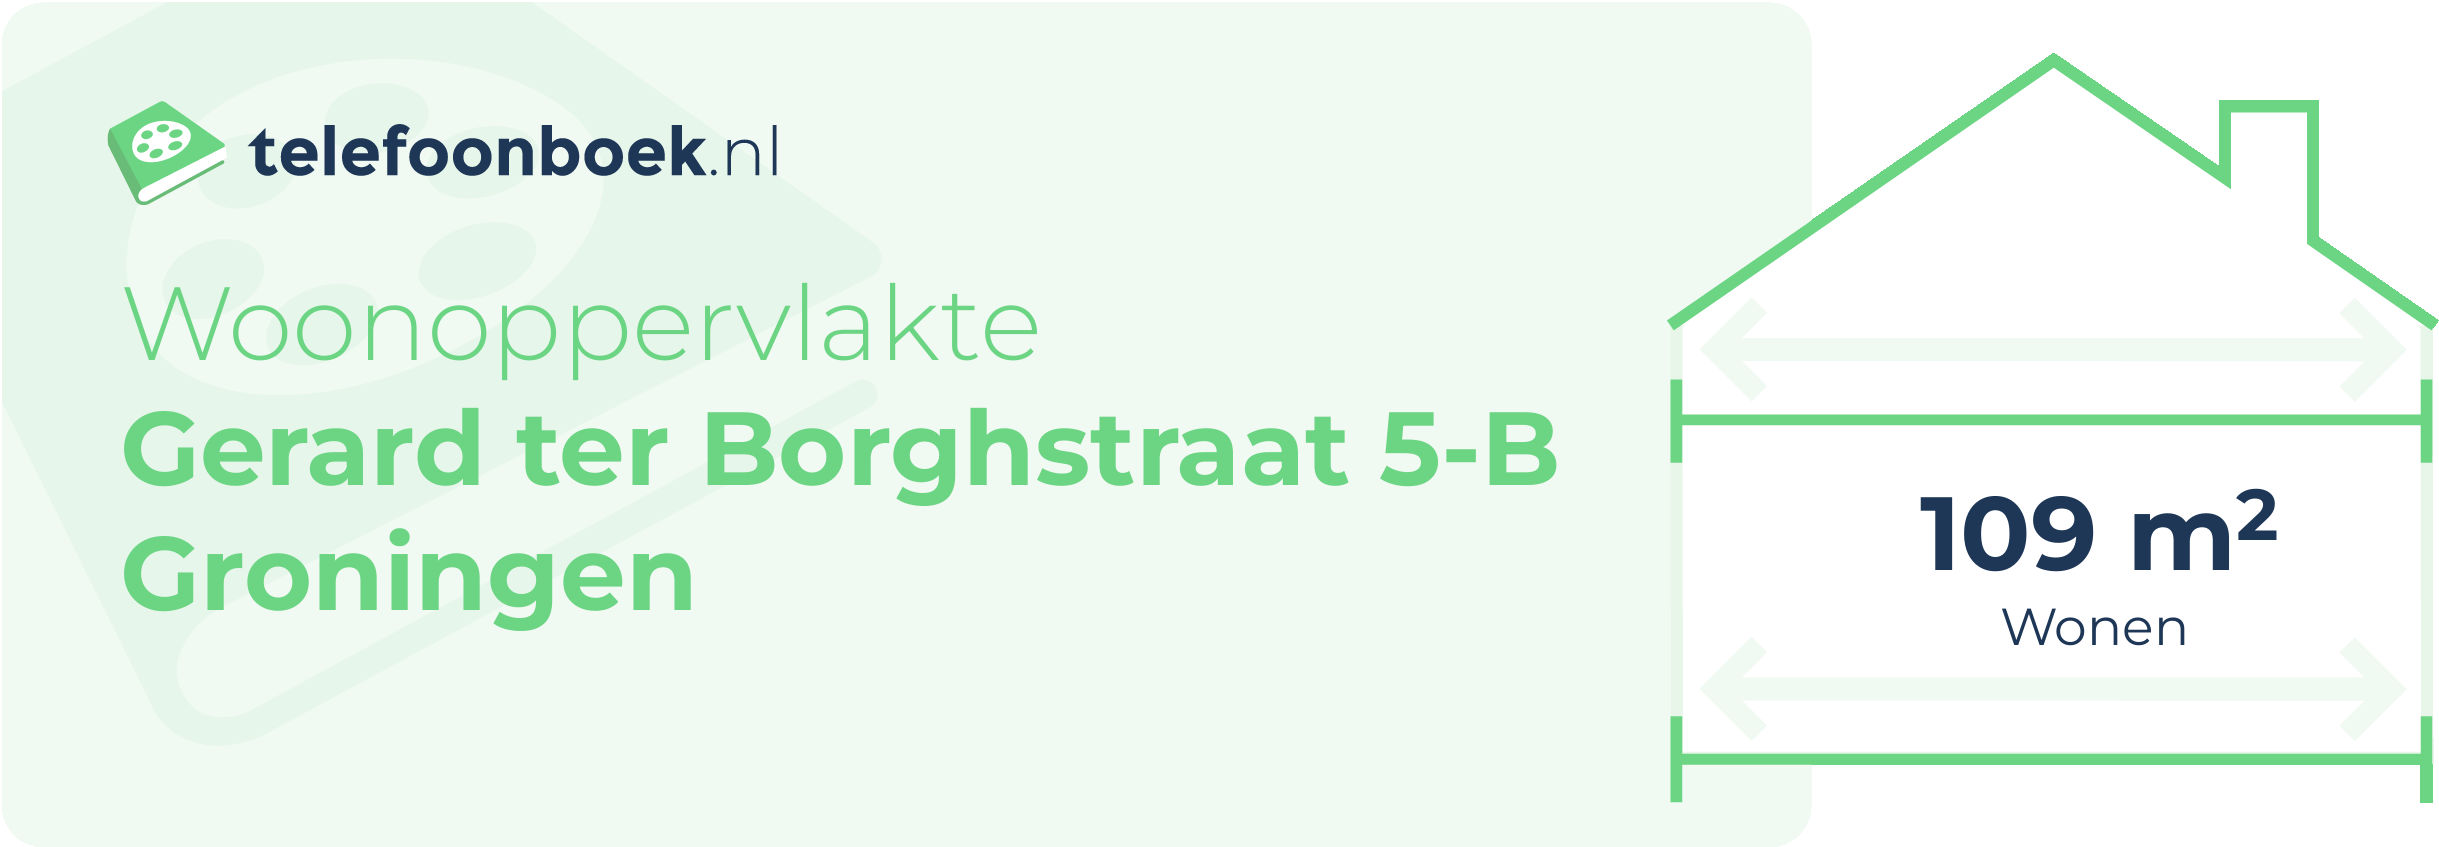 Woonoppervlakte Gerard Ter Borghstraat 5-B Groningen